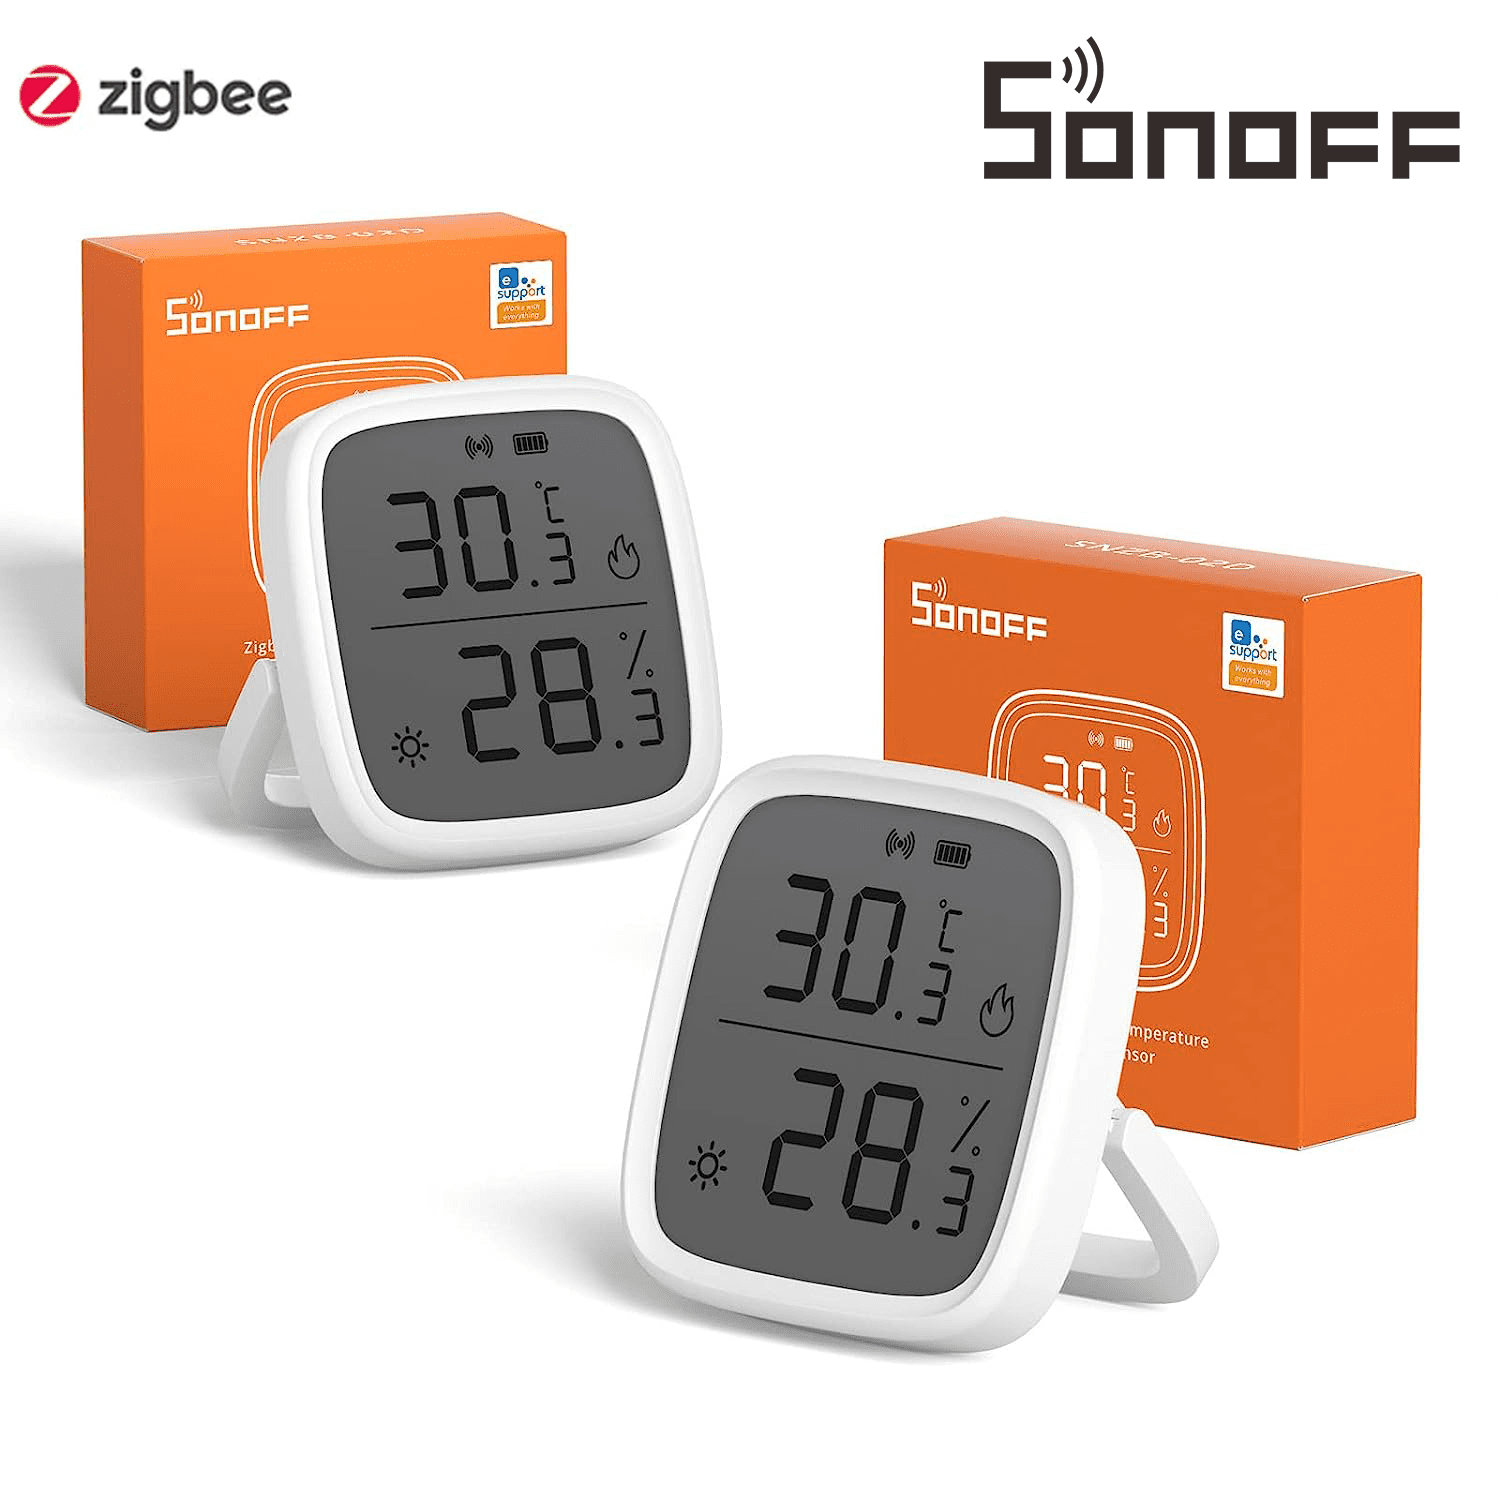 Zigbee humidity sensor - frient Smart Humidity Sensor - frient Sma